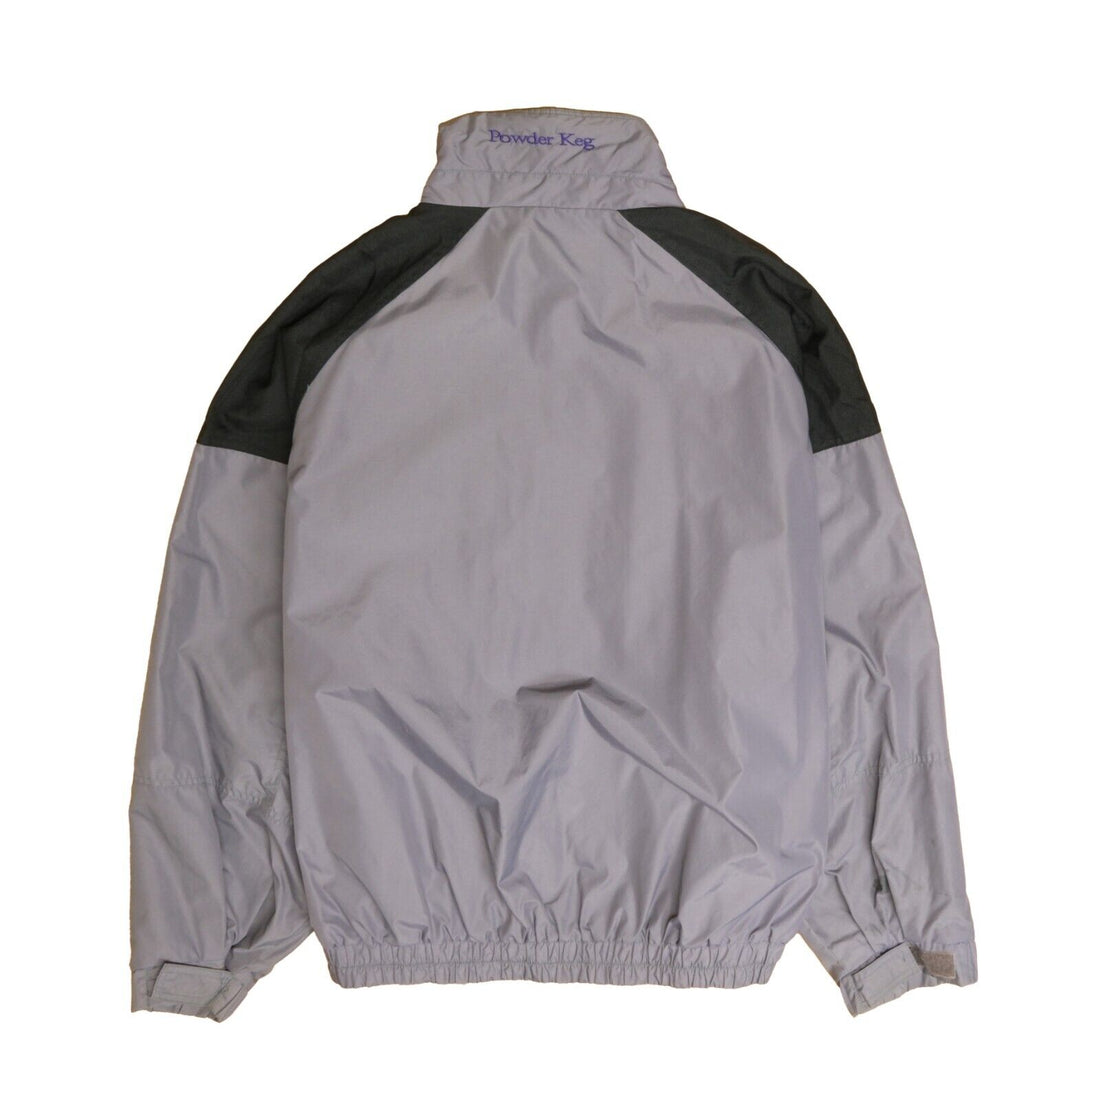 Vintage Columbia Sportswear Bomber Ski Jacket Size XL Gray 90s